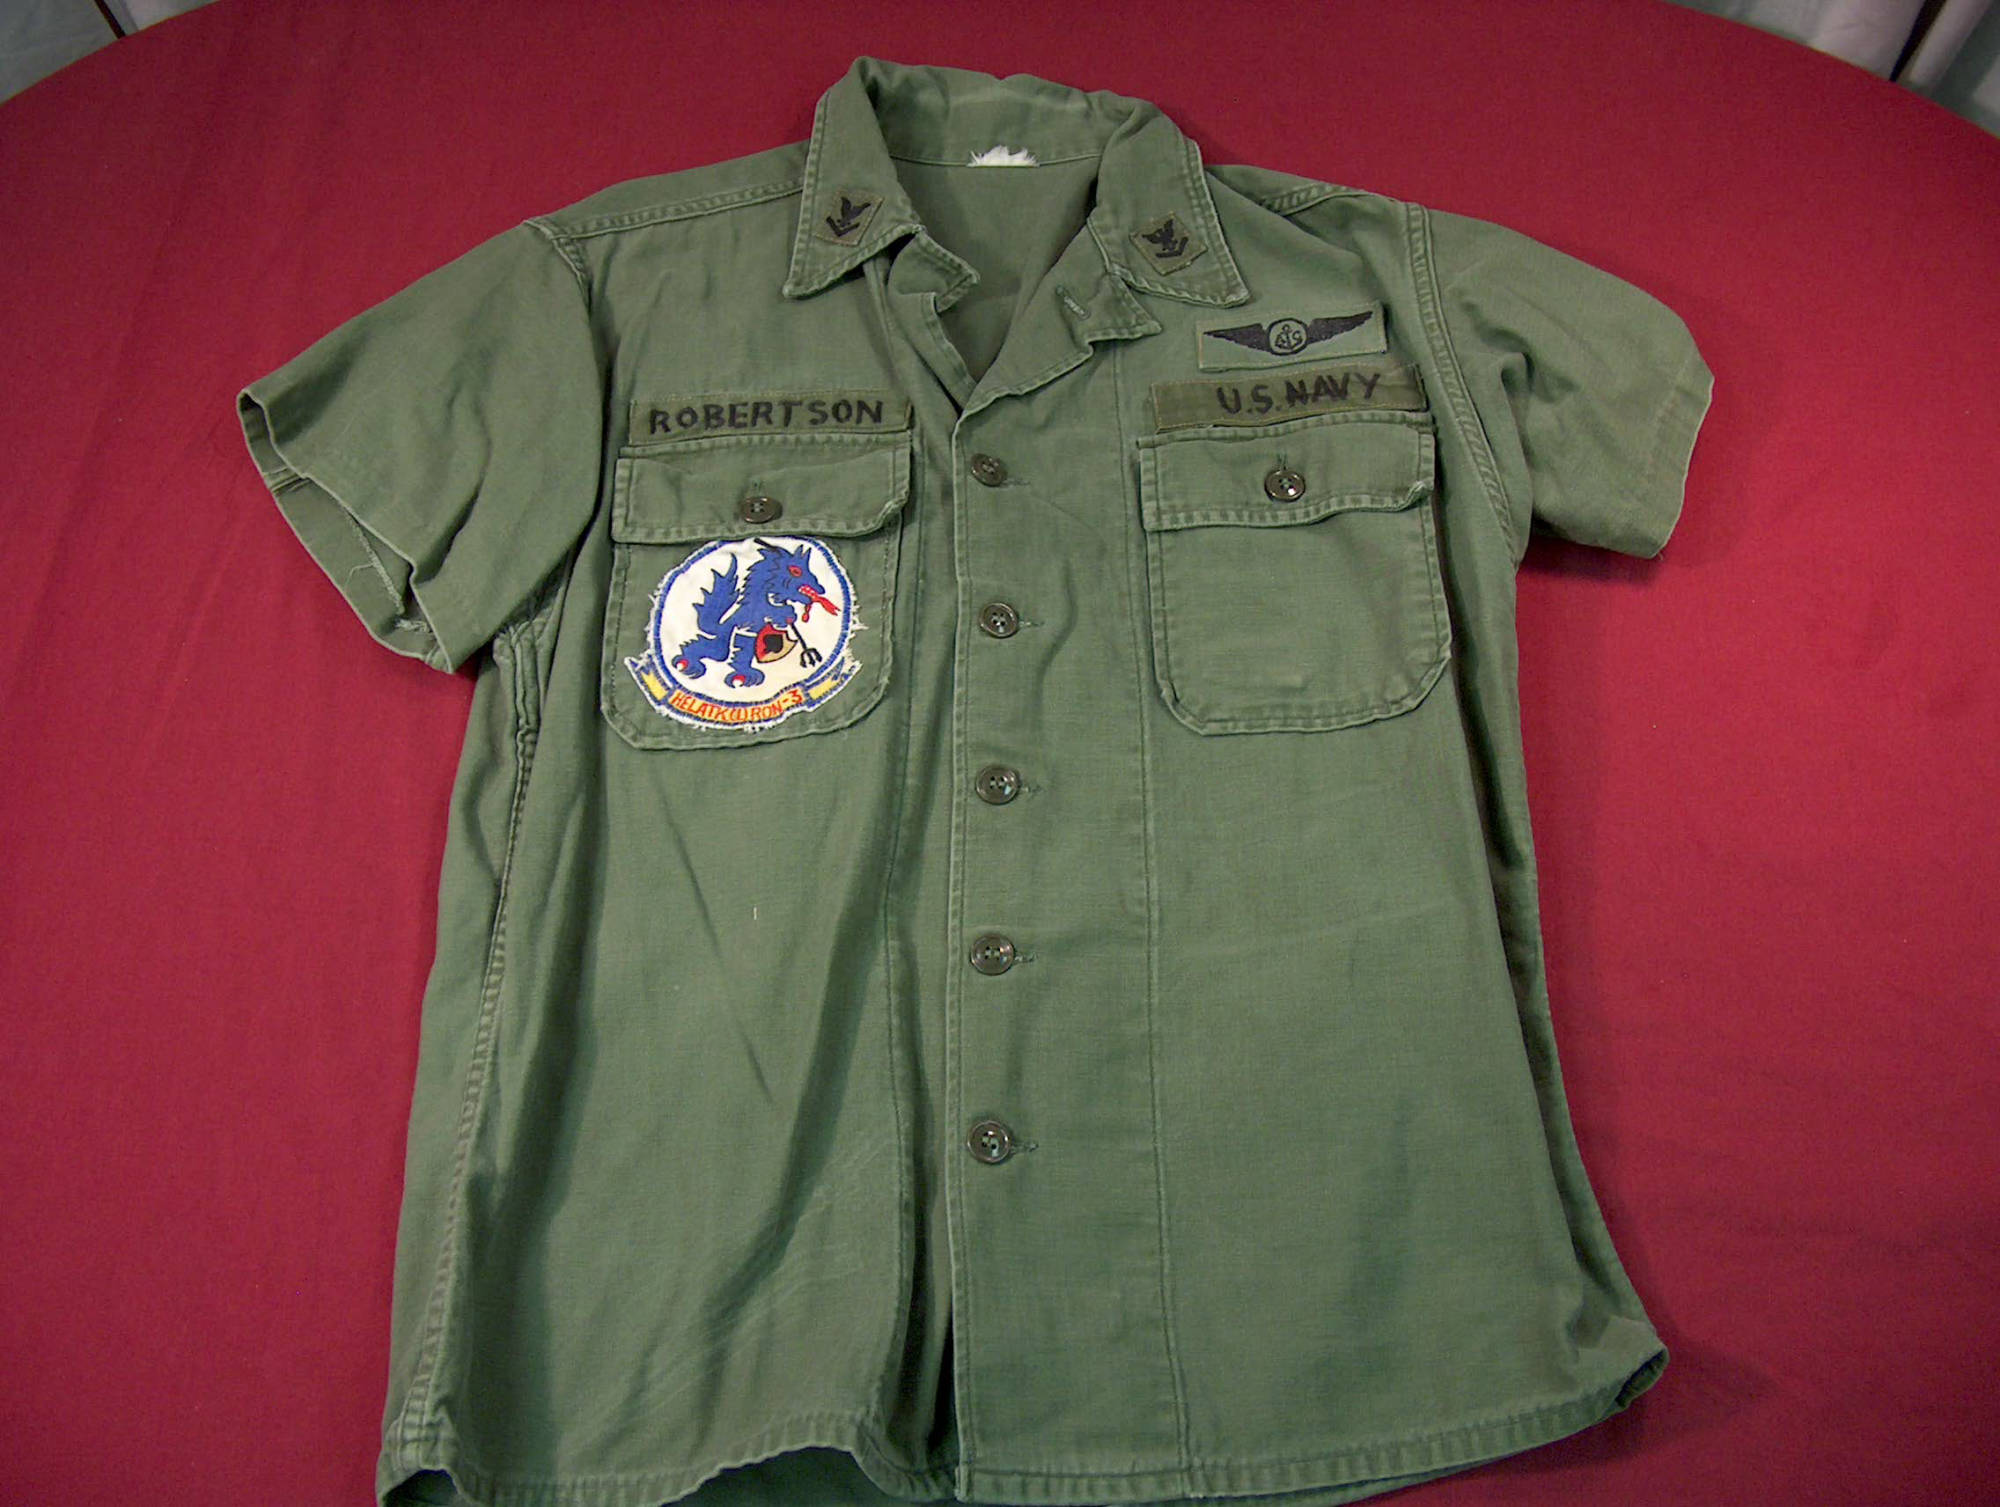 Vietnam War Uniforms